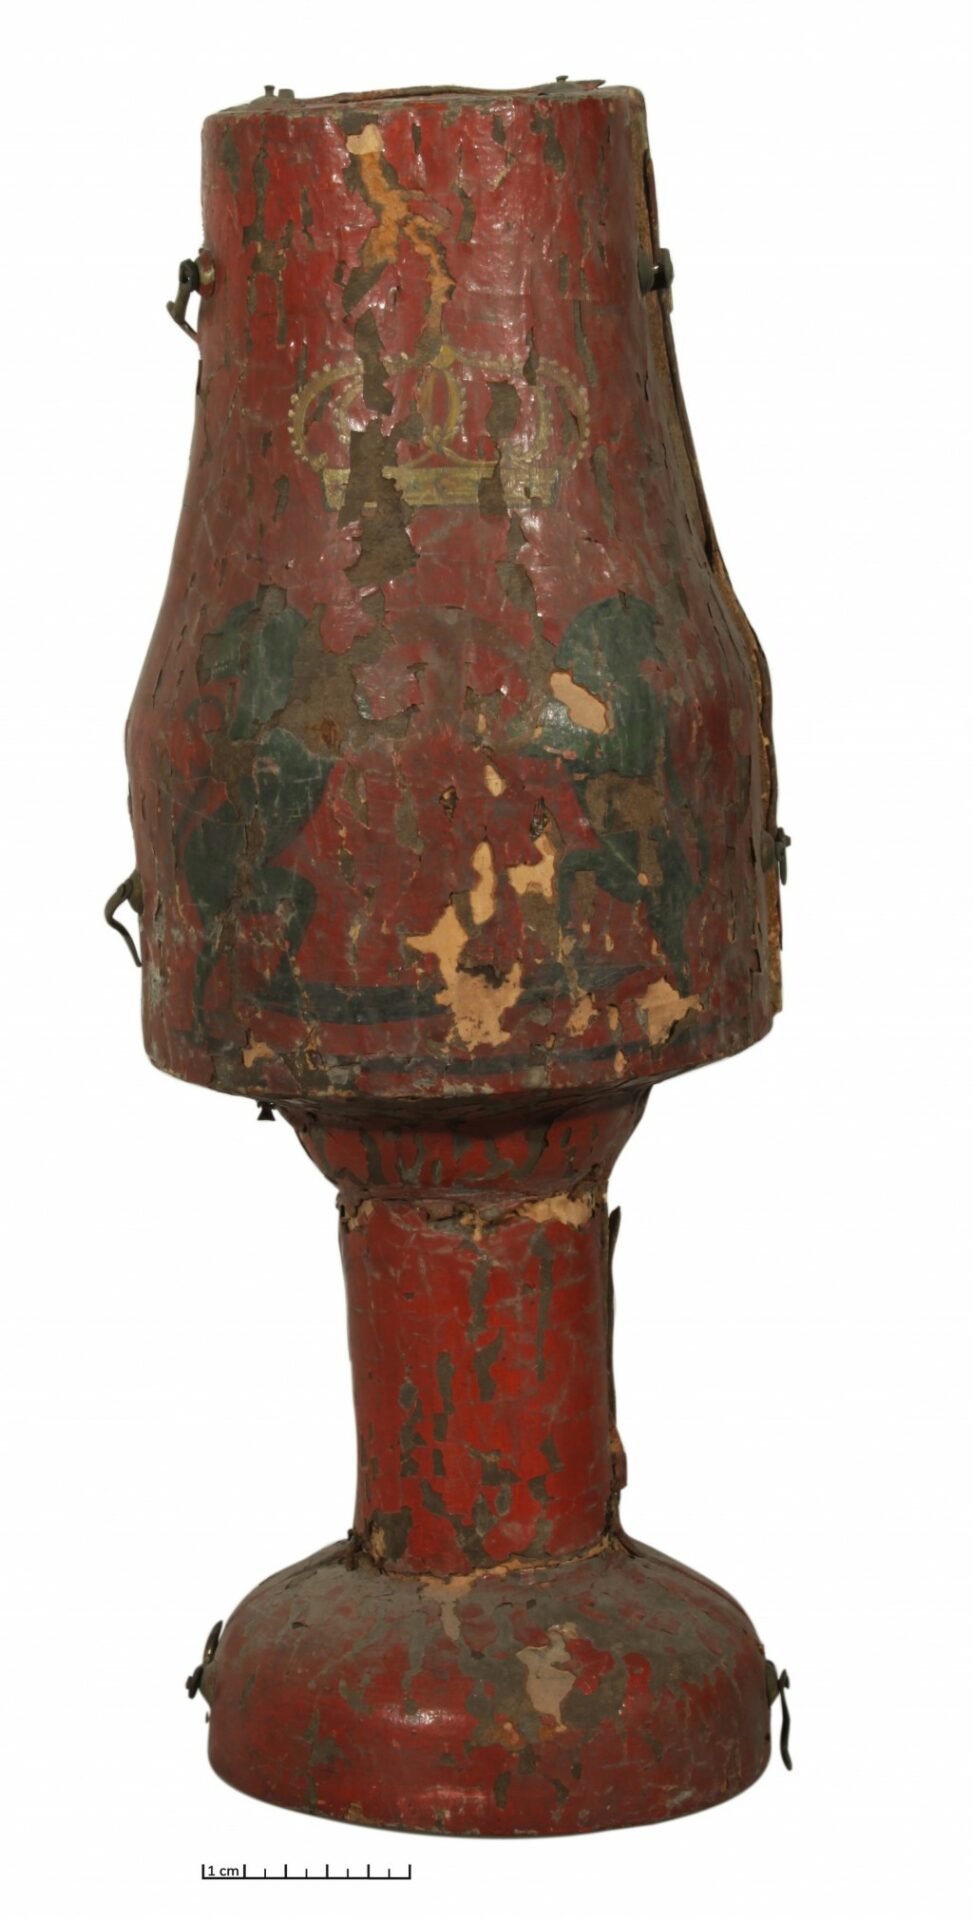 Gefasstes Pokalfutteral aus Leder, Holz, Metall und Farbmittel, 18. Jh.
© Reiss-Engelhorn-Museen Mannheim, Foto: Lisa Masen.